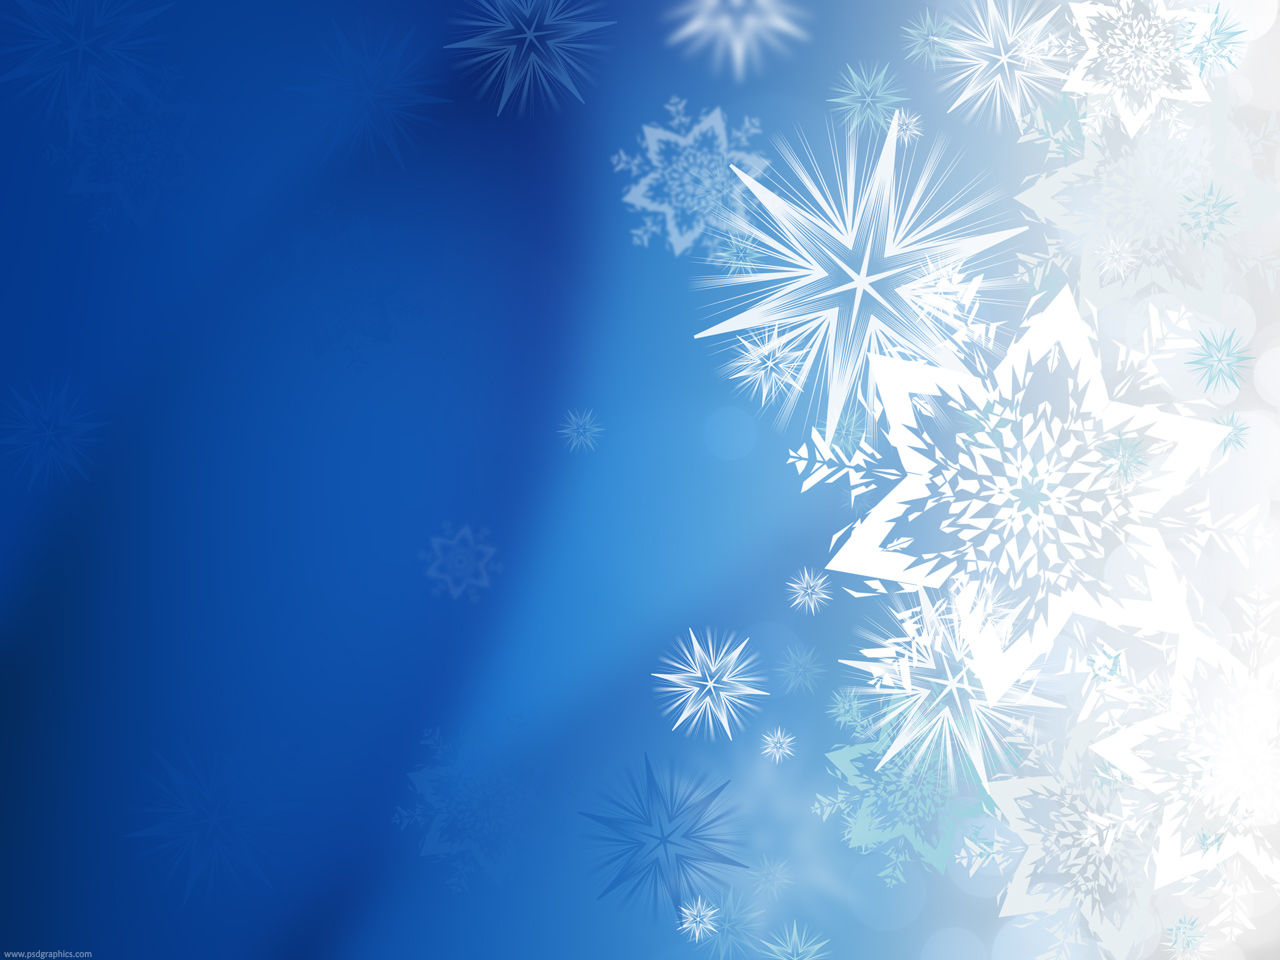 Magic Winter Snowflakes Psdgraphics